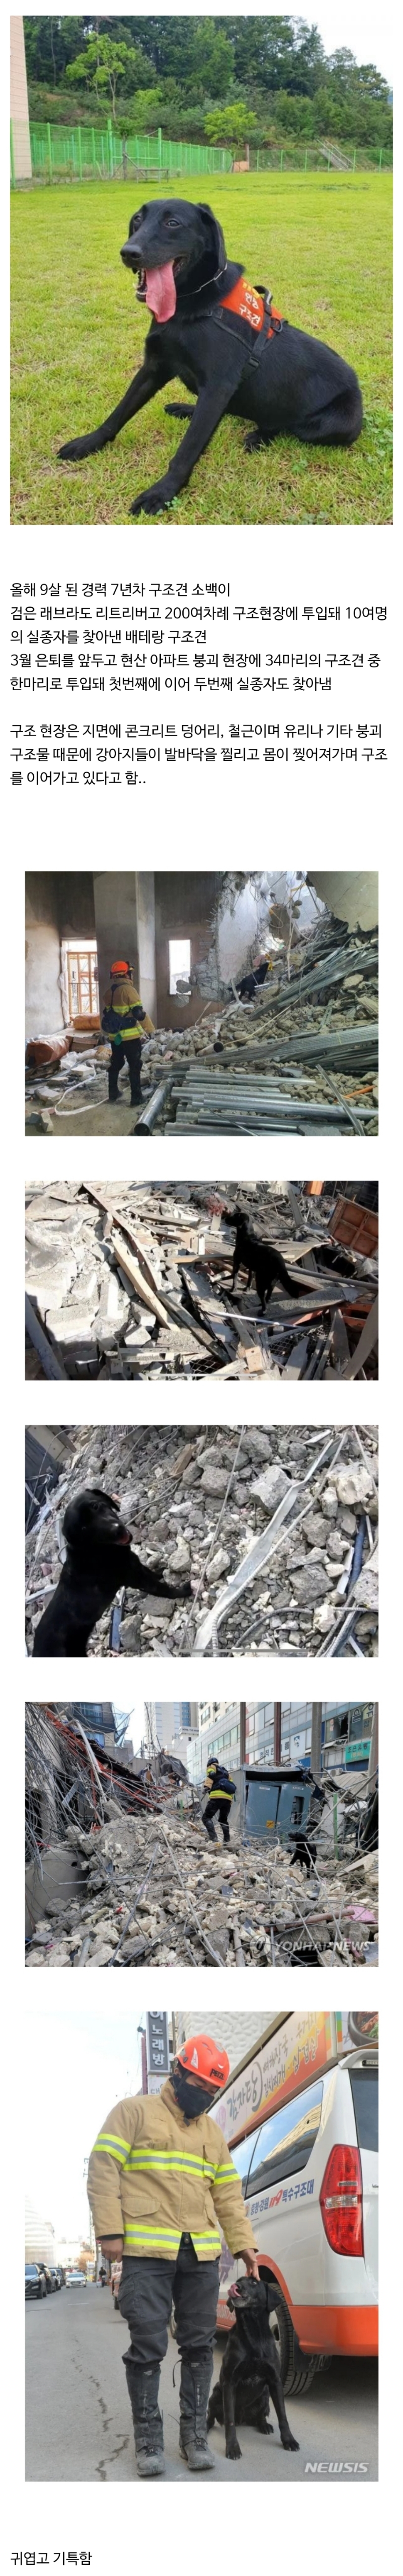 Rescue dog found missing in Gwangju apartment collapse.jpg